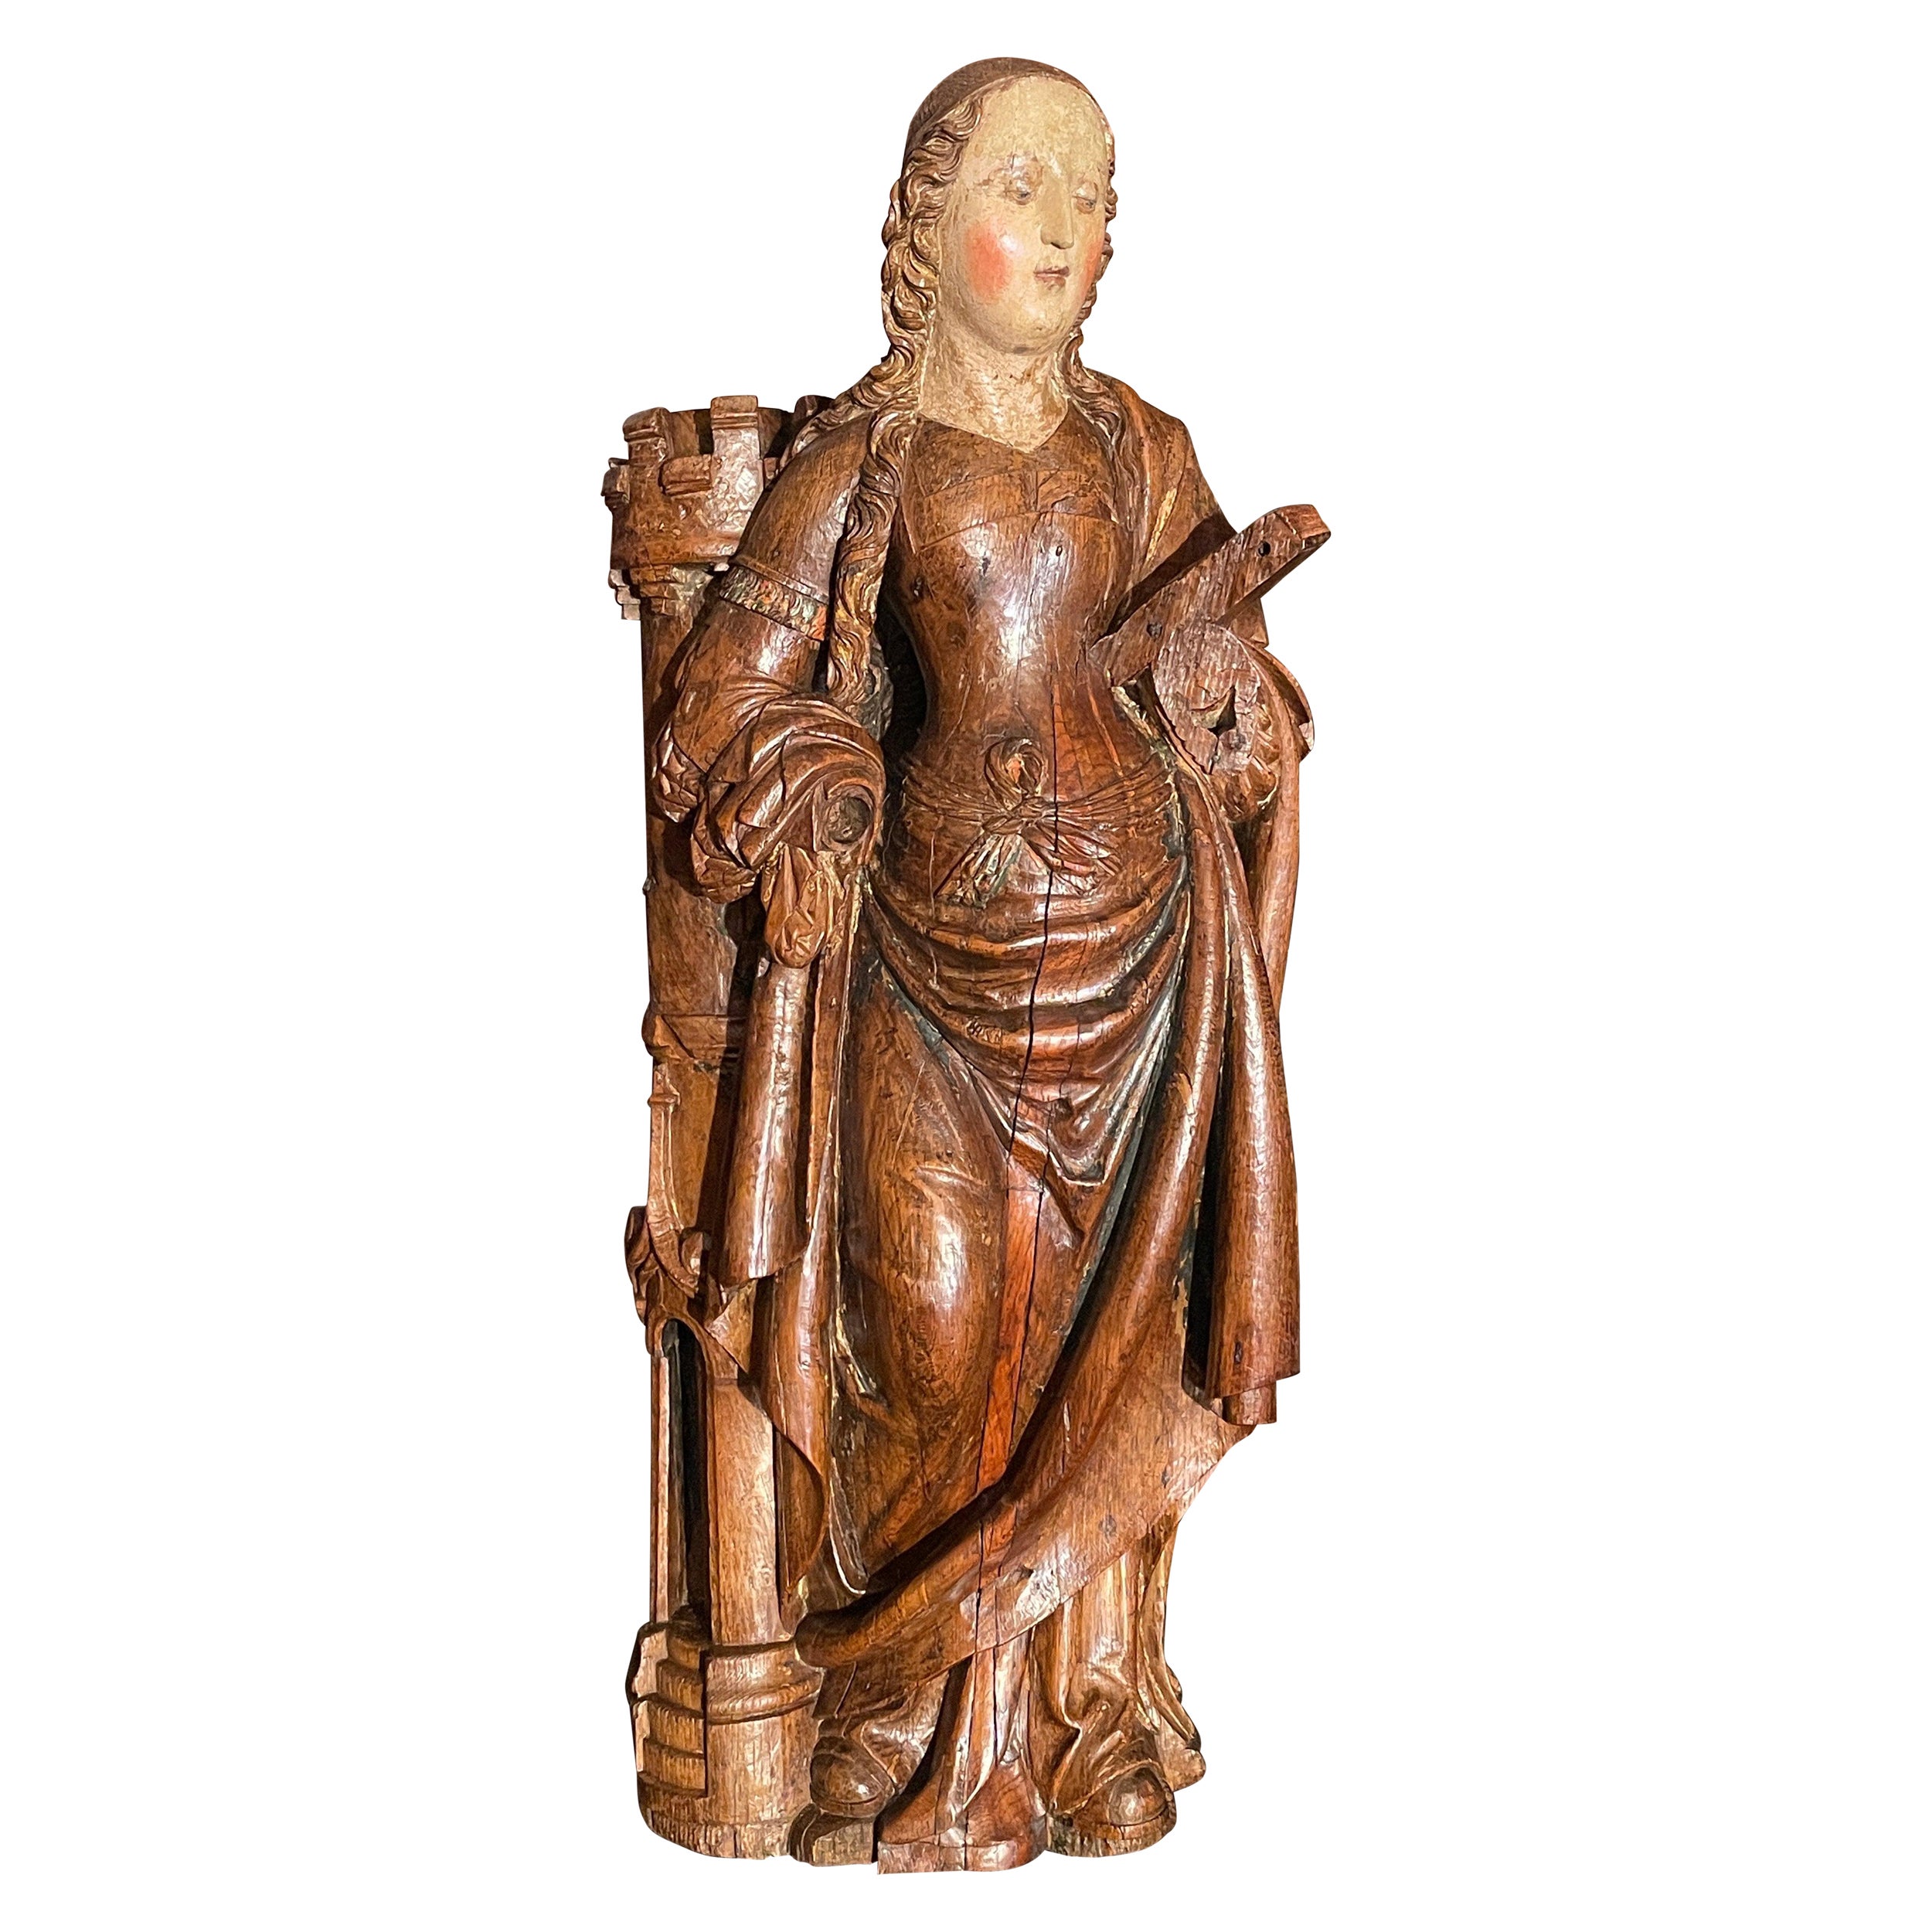 Important Sculpture Representing Saint Barbara